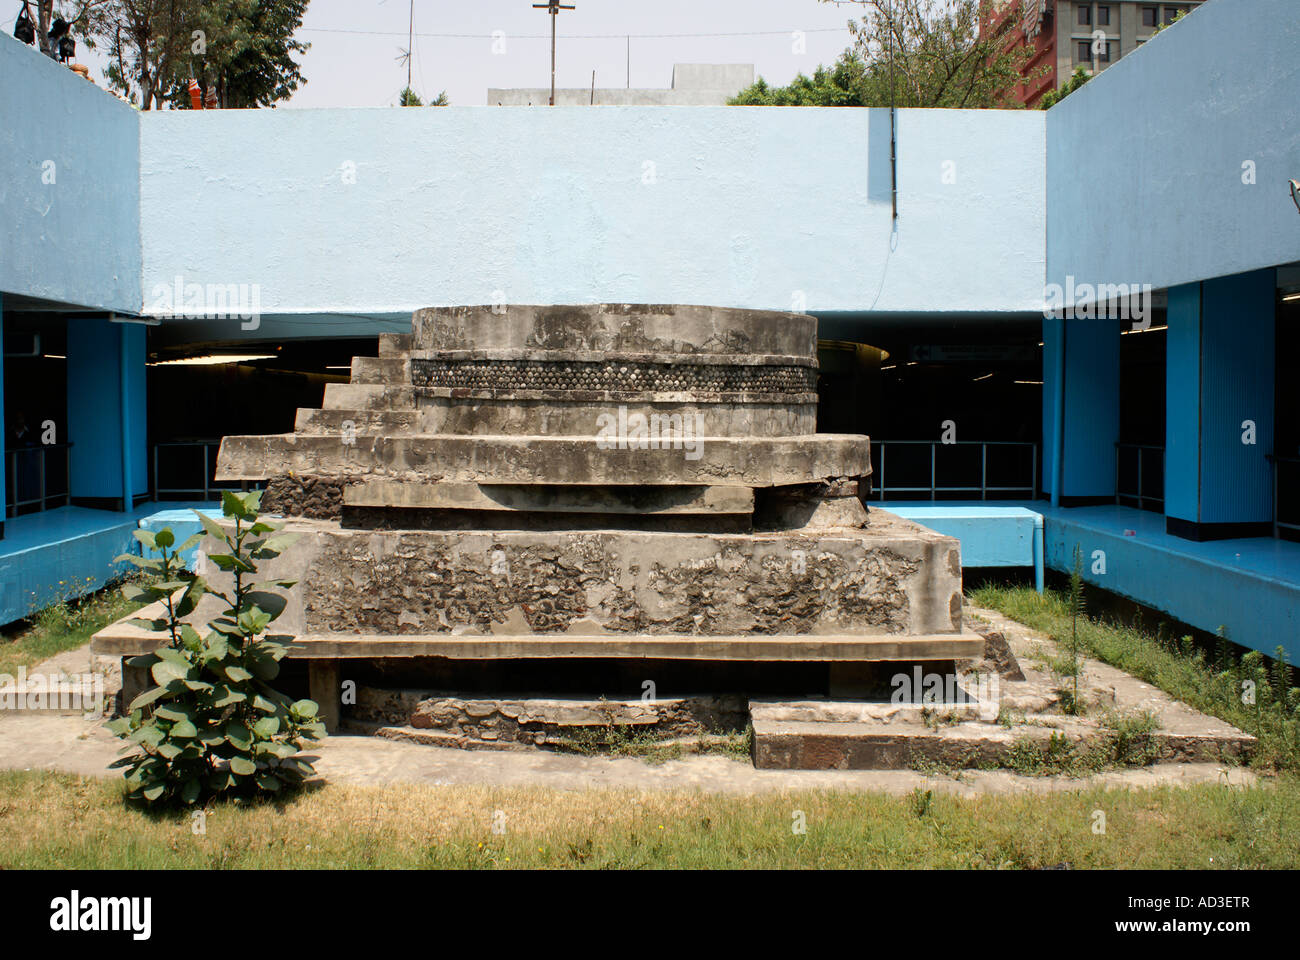 Aztec ruins at the Pino Suarez metro subway station Mexico City Stock Photo